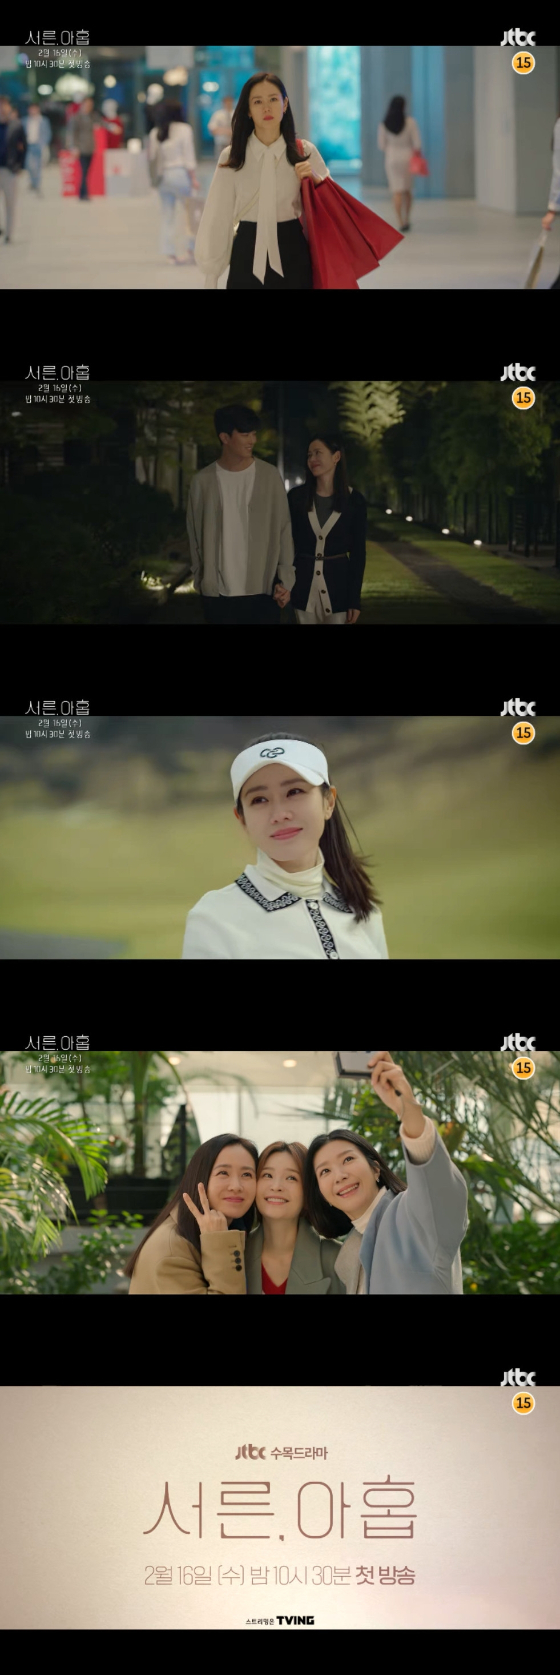 JTBC 새 수목드라마 '서른, 아홉'의 손예진 로맨스 티저가 공개됐다./사진=JTBC '서른, 아홉' 티저 영상 캡처